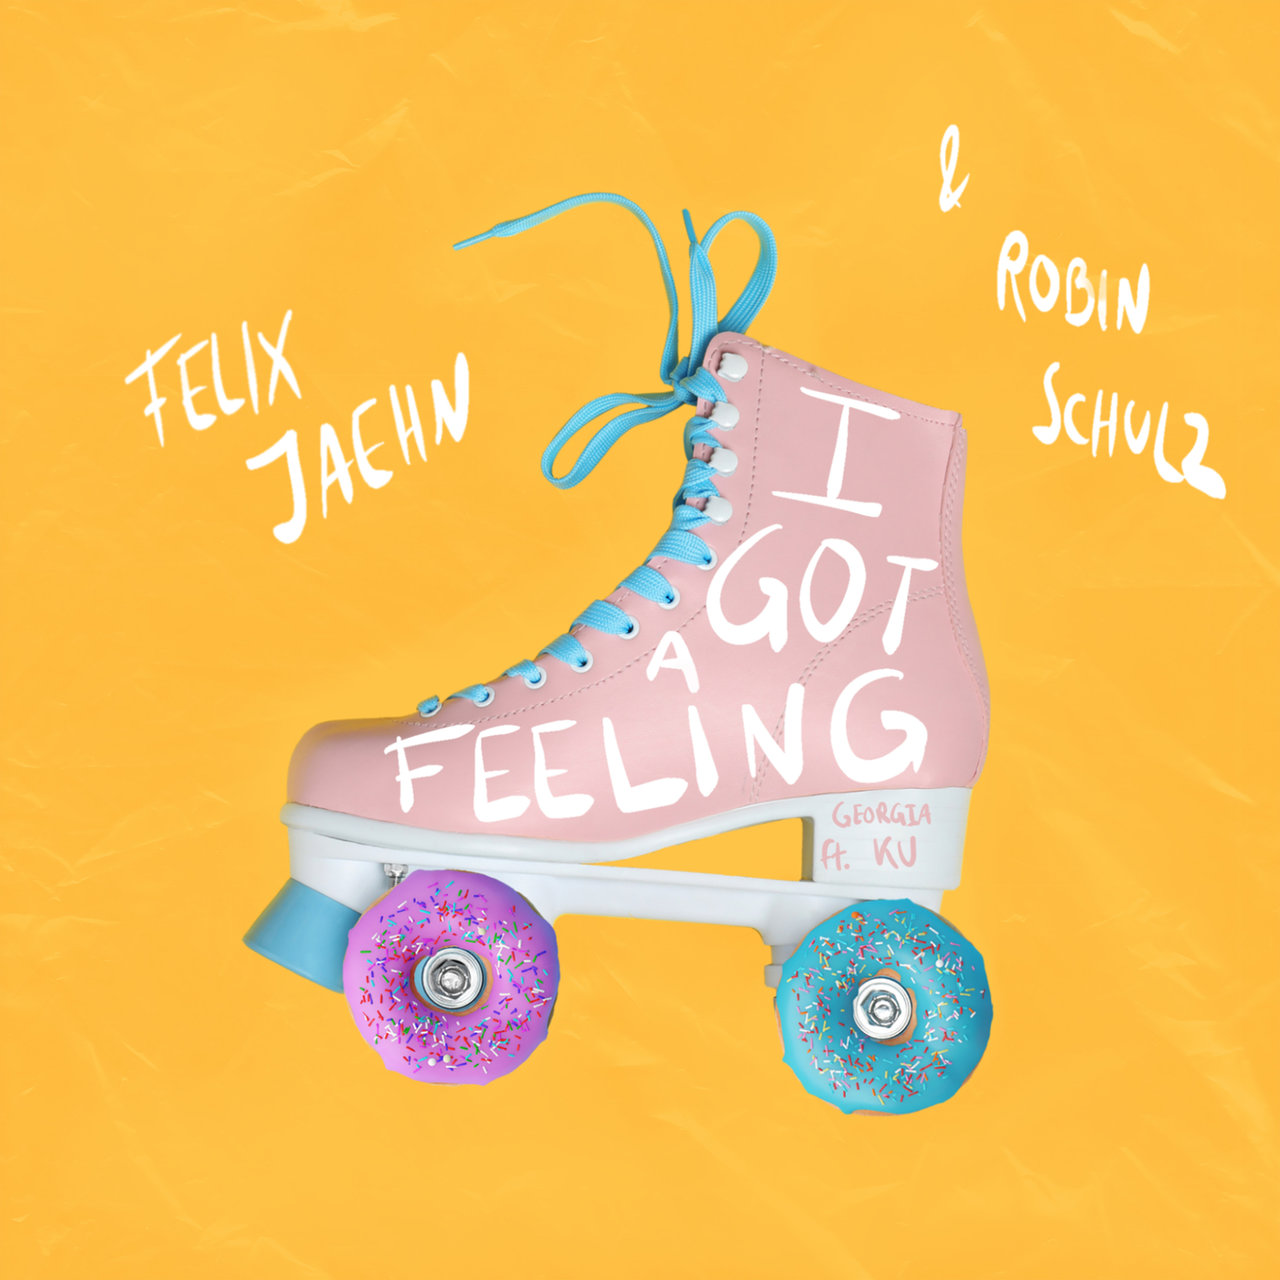 Felix Jaehn & Robin Schulz featuring Georgia Ku — I Got A Feeling cover artwork